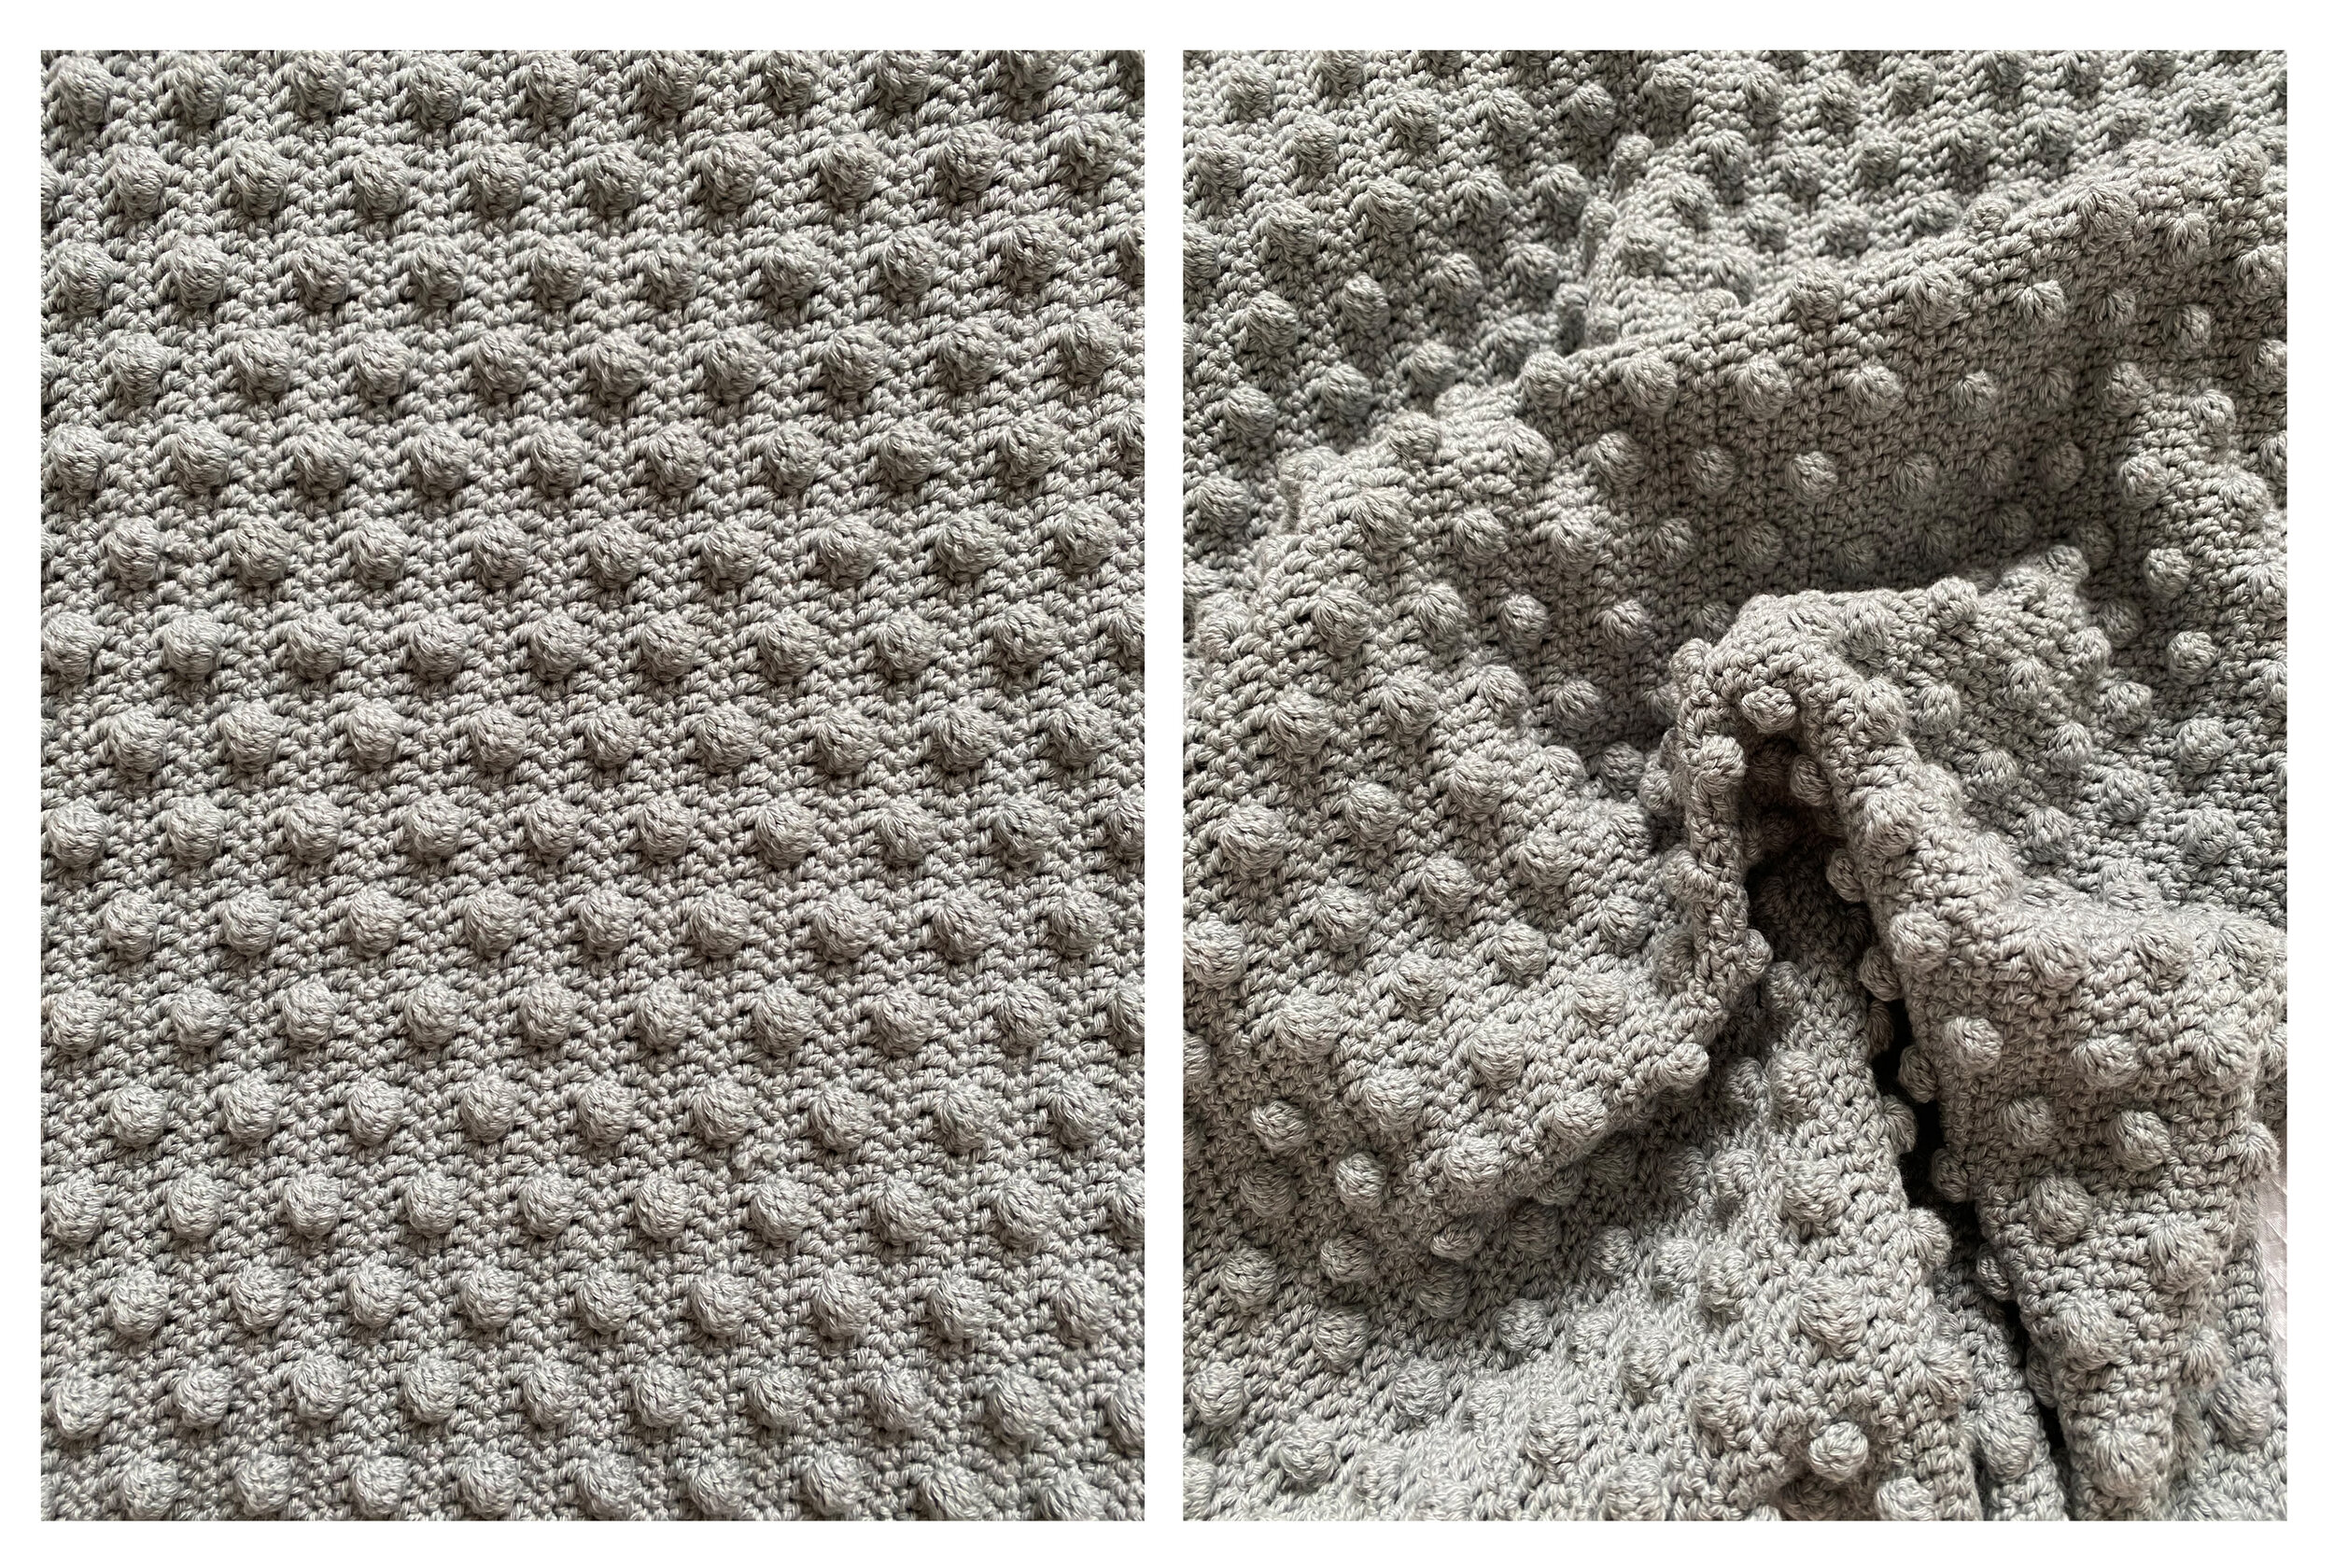  Crochet bobble stitch baby blanket in cotton merino blend 